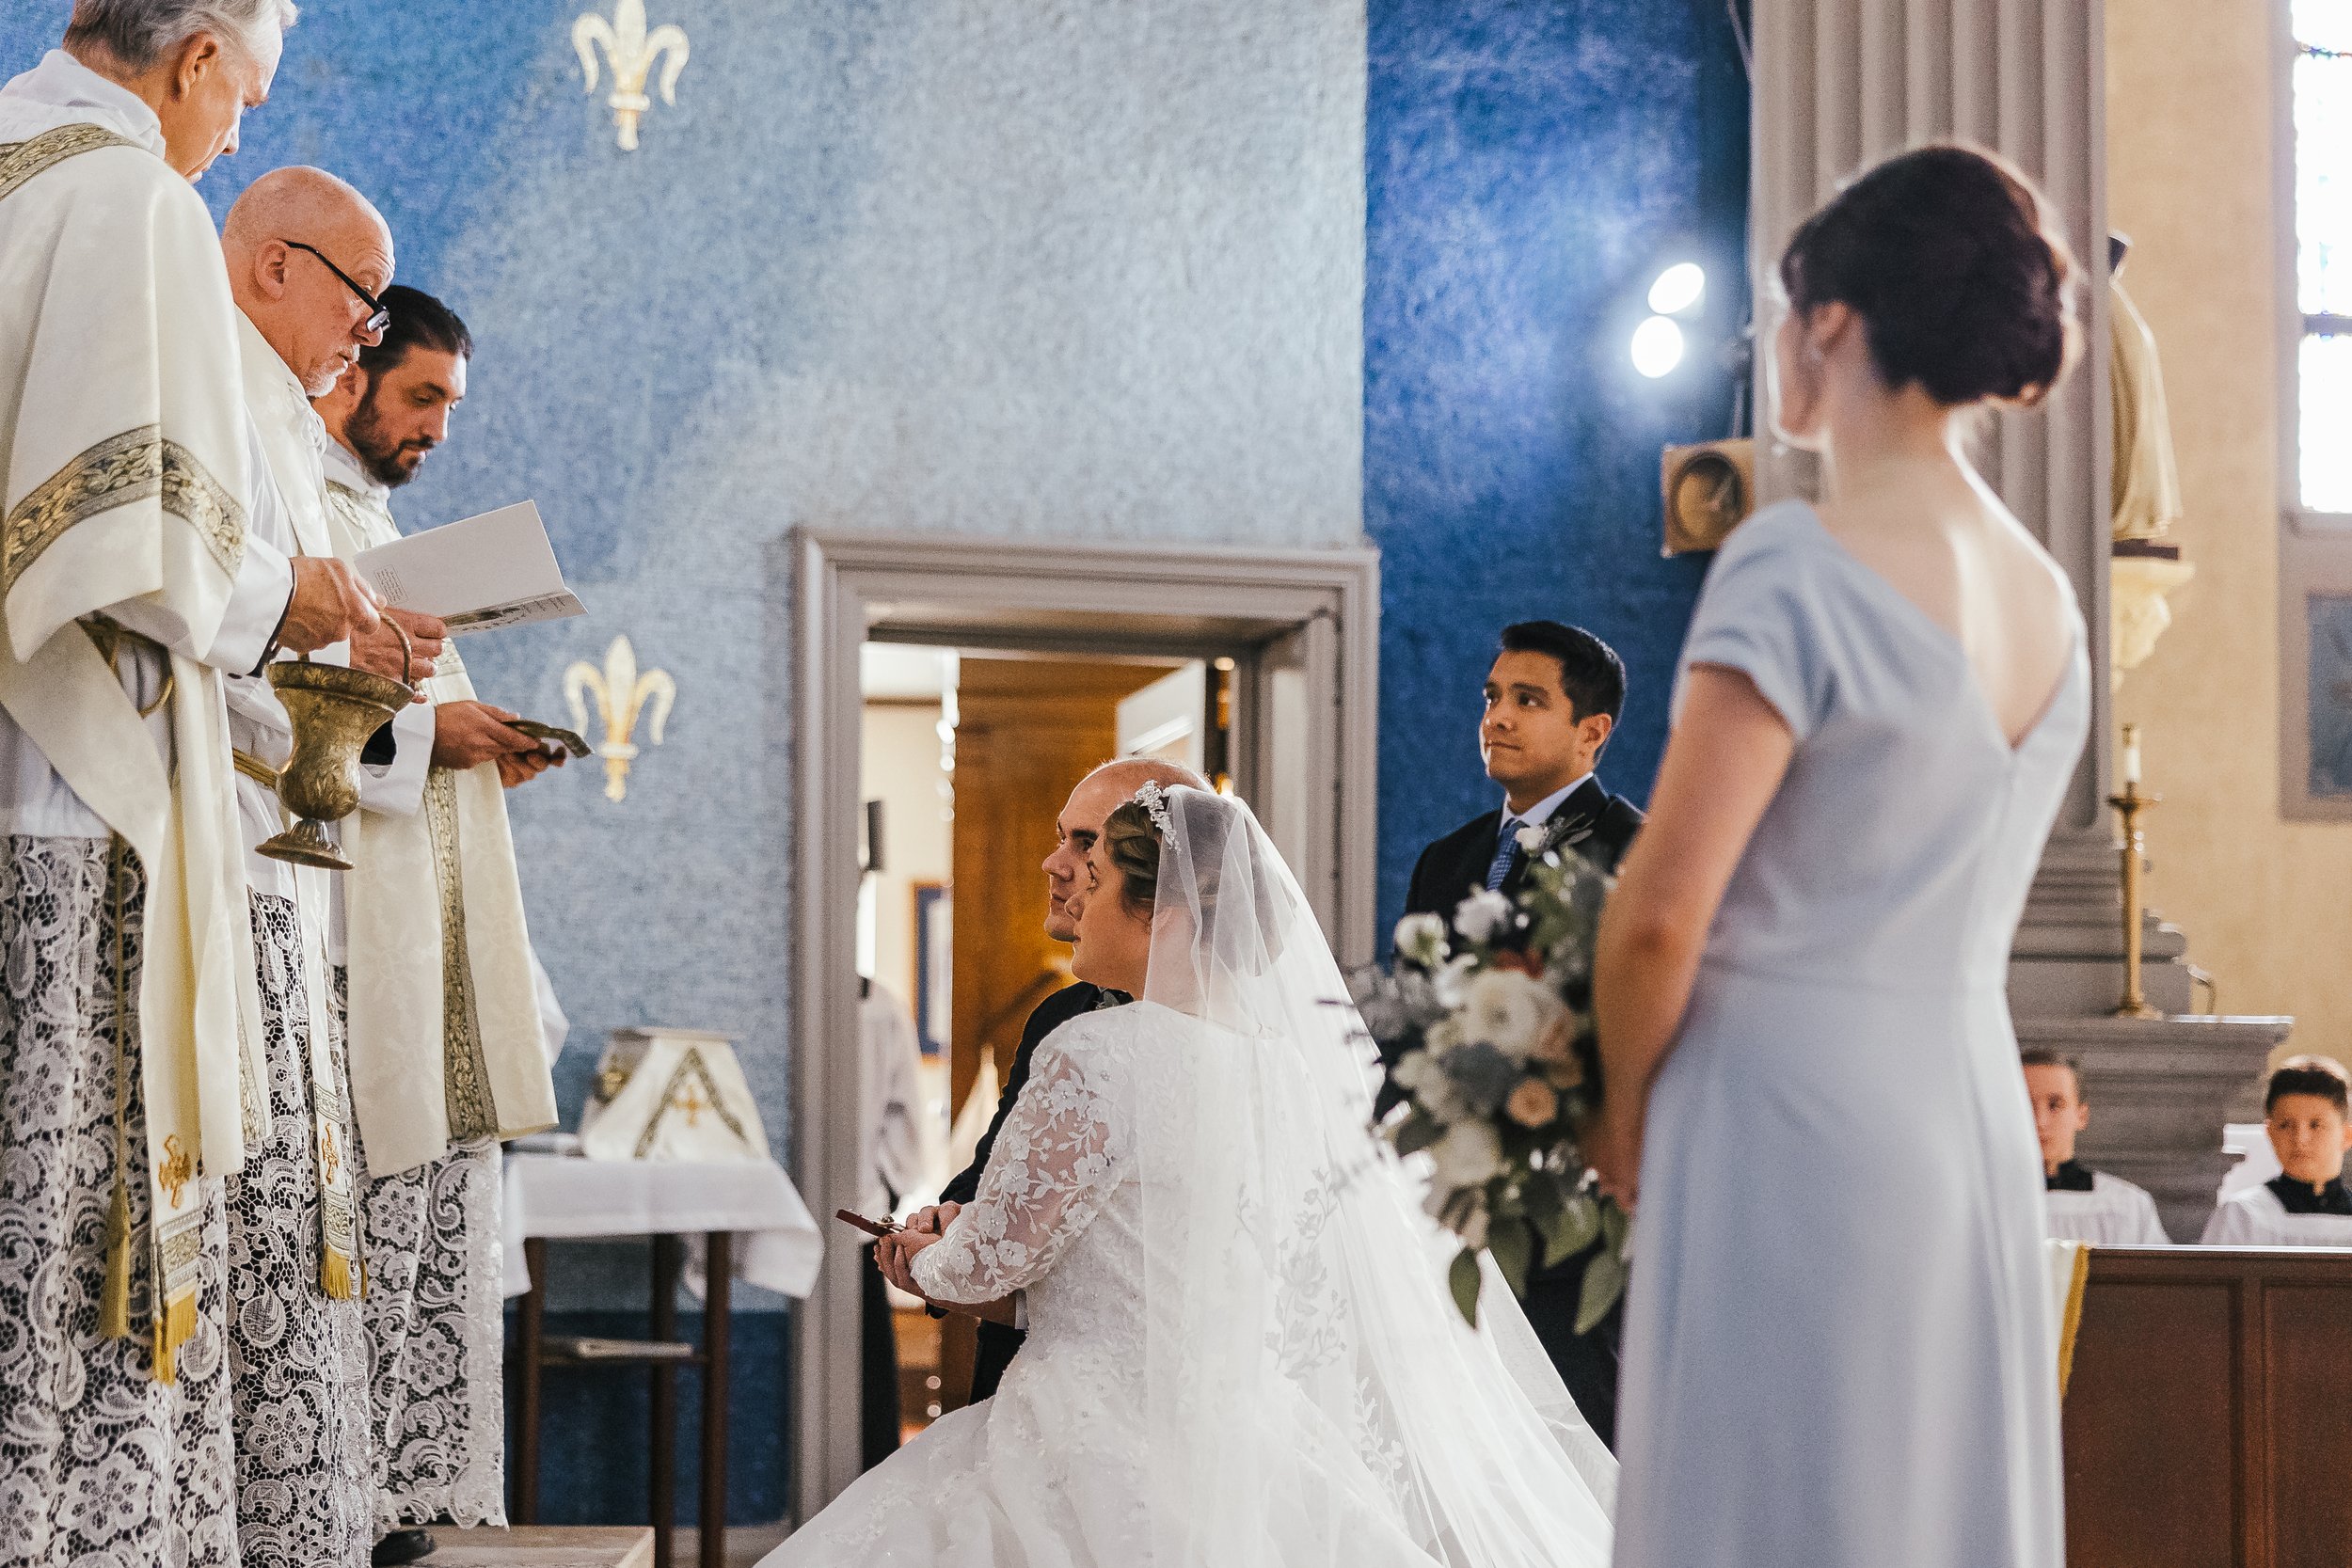 Catholic Wedding Gown by Chaitanya Suman at Coroflot.com